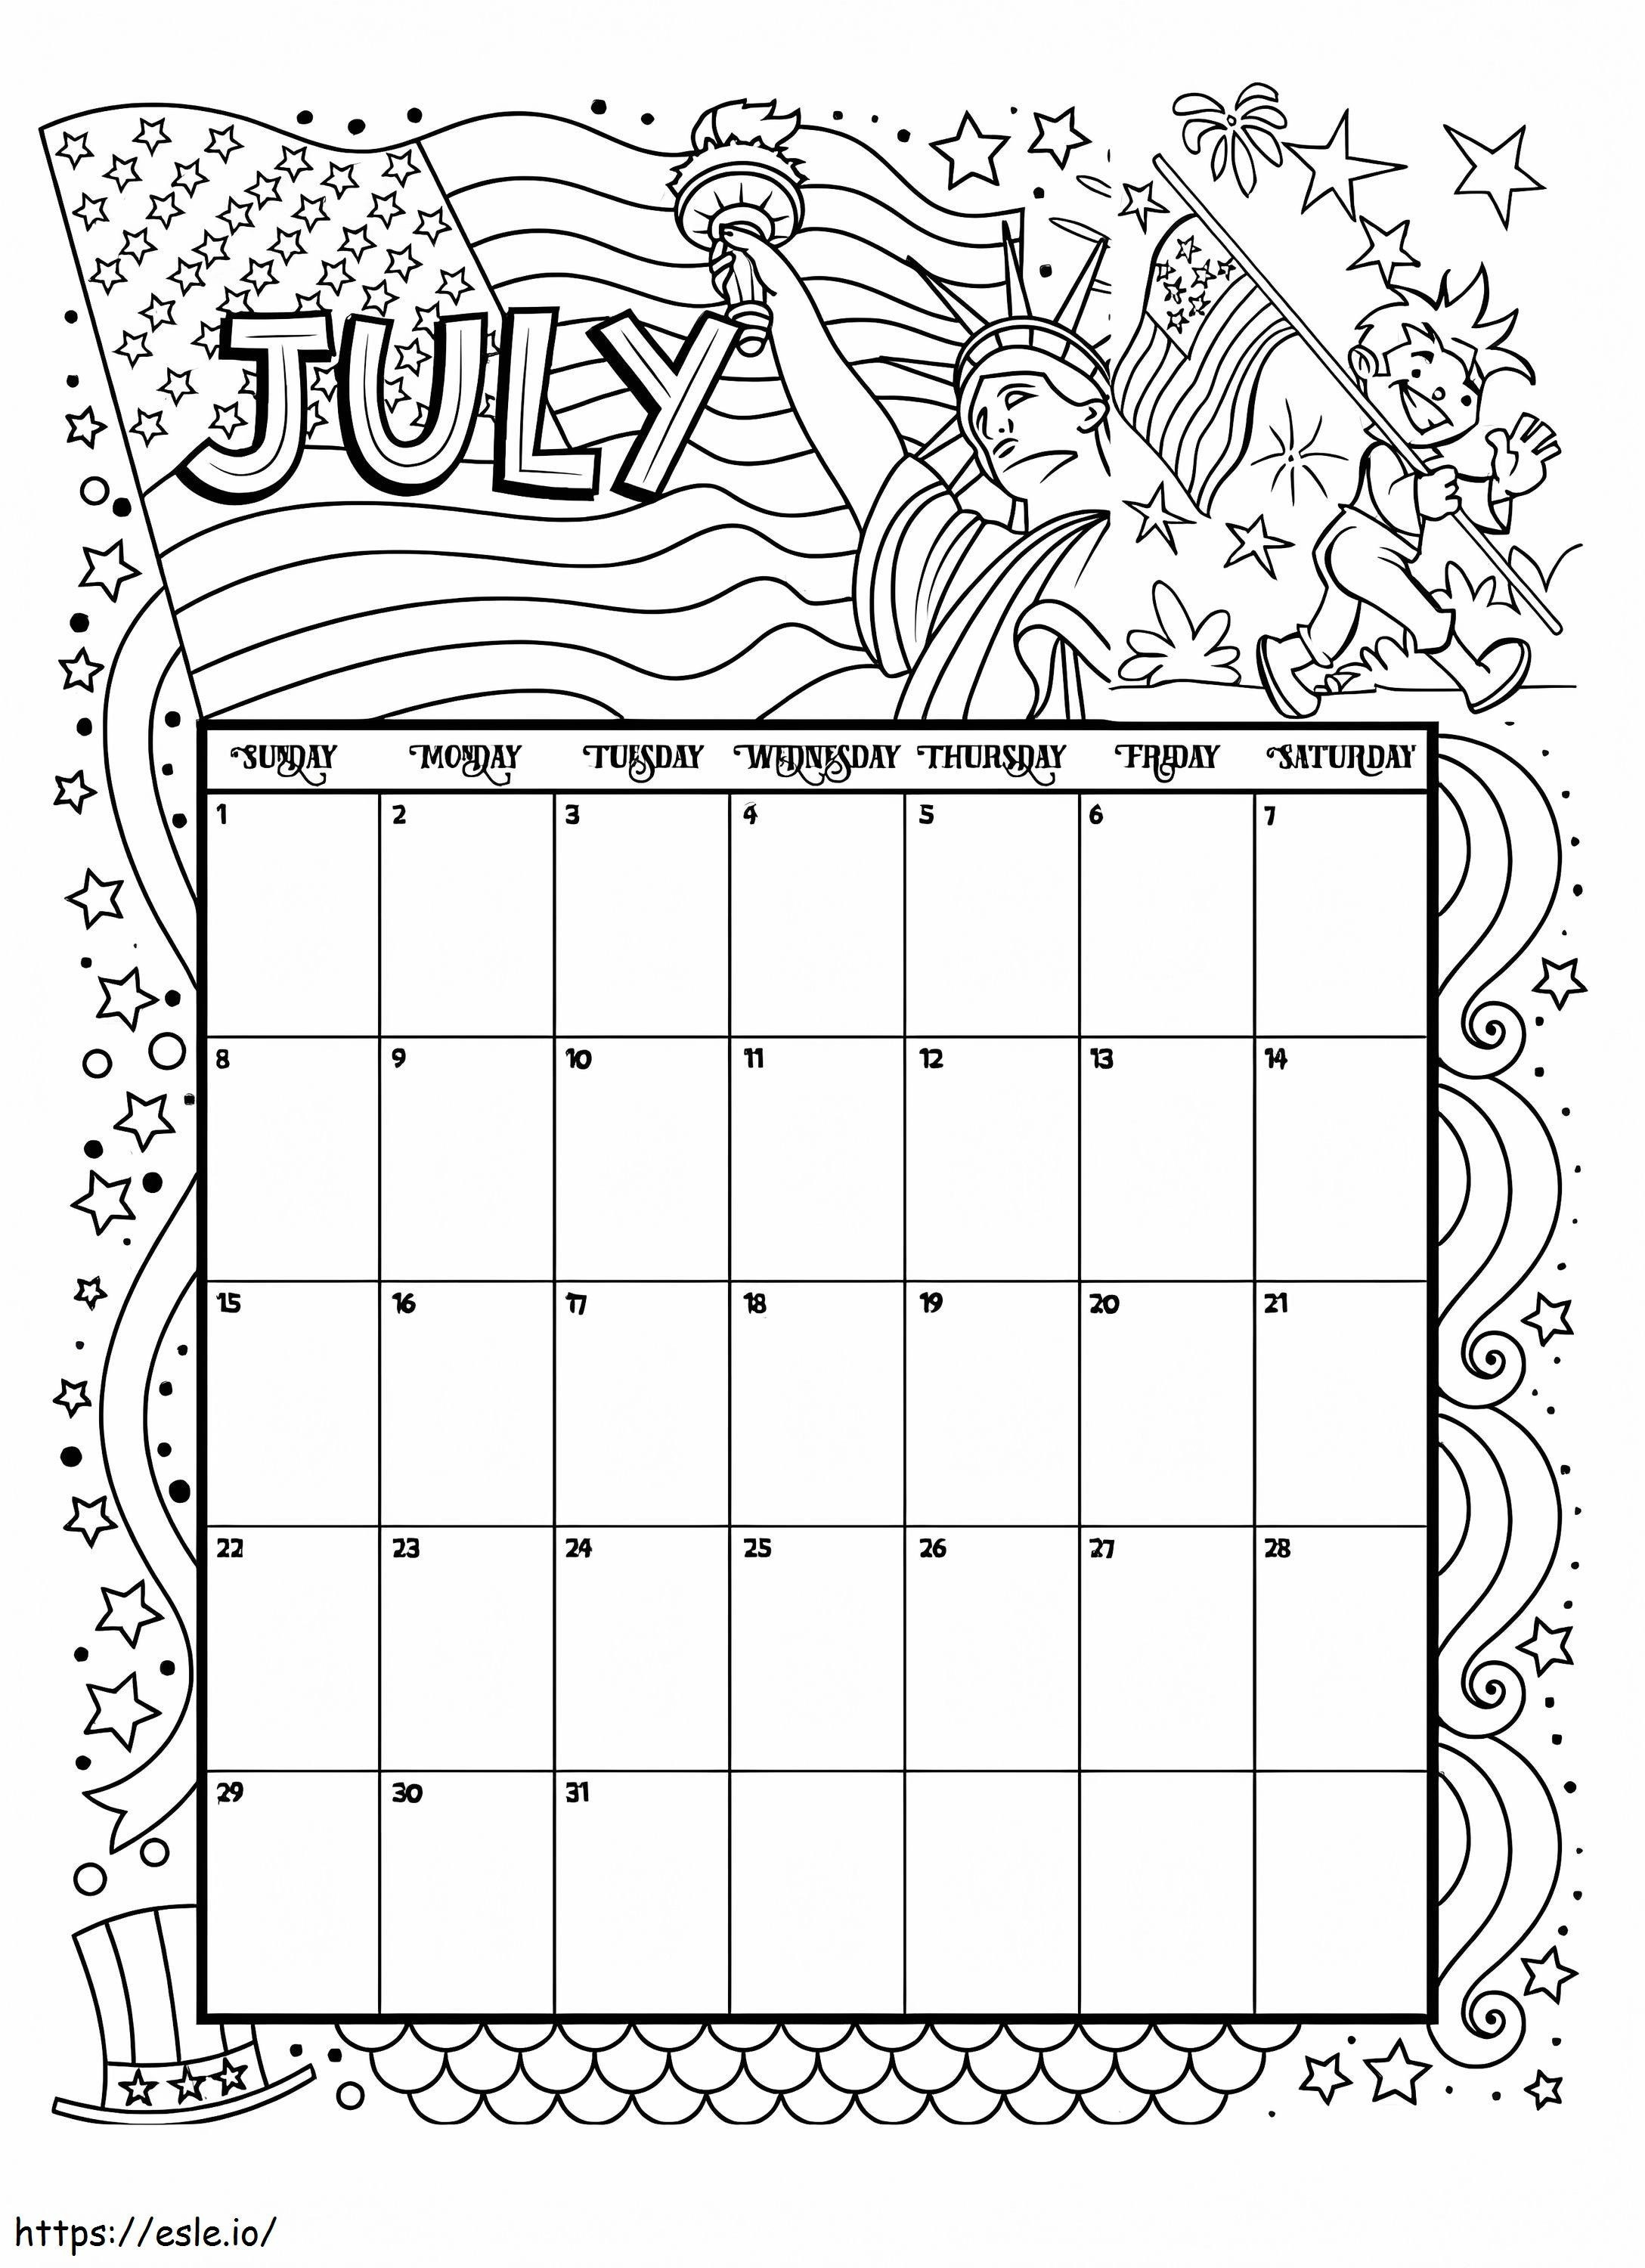 Juli kalender kleurplaat kleurplaat